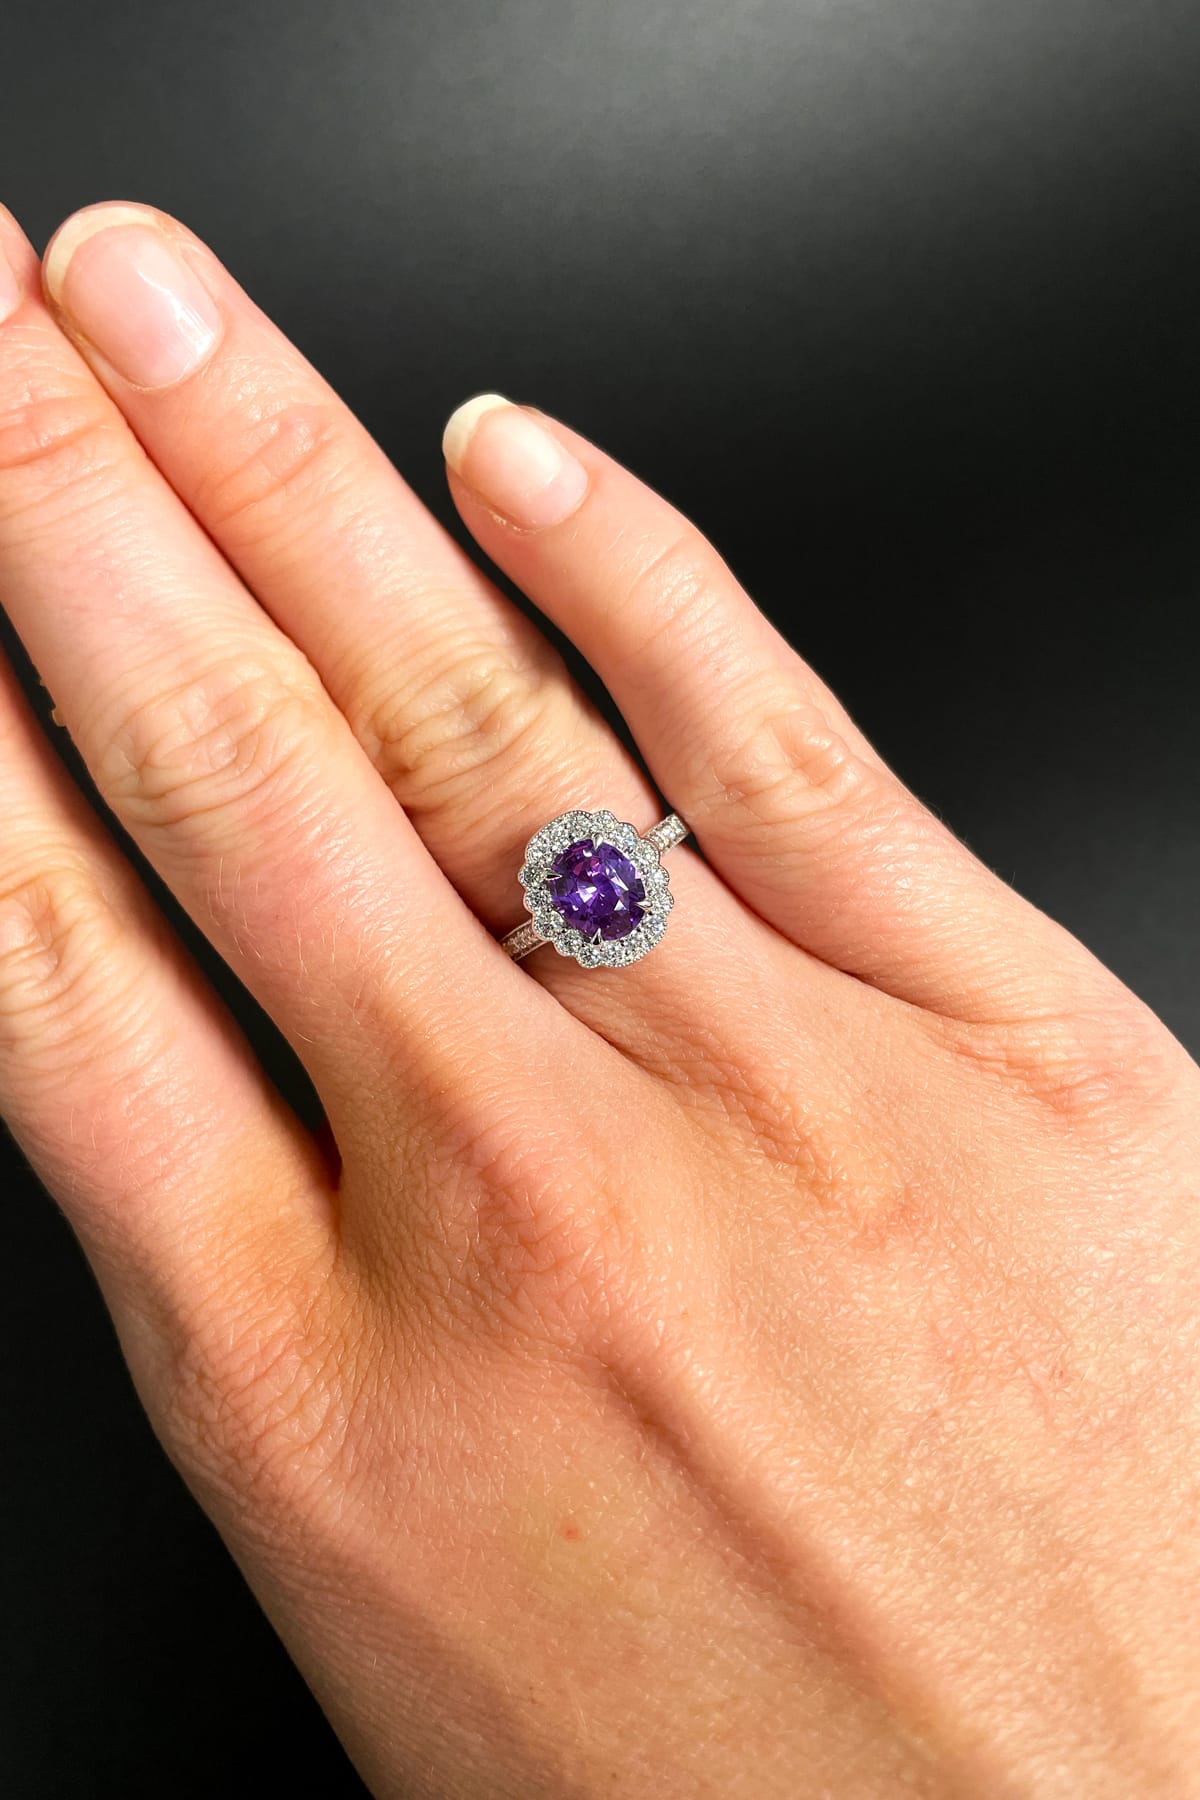 18 Carat White Gold With 1.56 Carat Purple Sapphire Diamond Halo Ring available at LeGassick Diamonds and Jewellery Gold Coast, Australia.